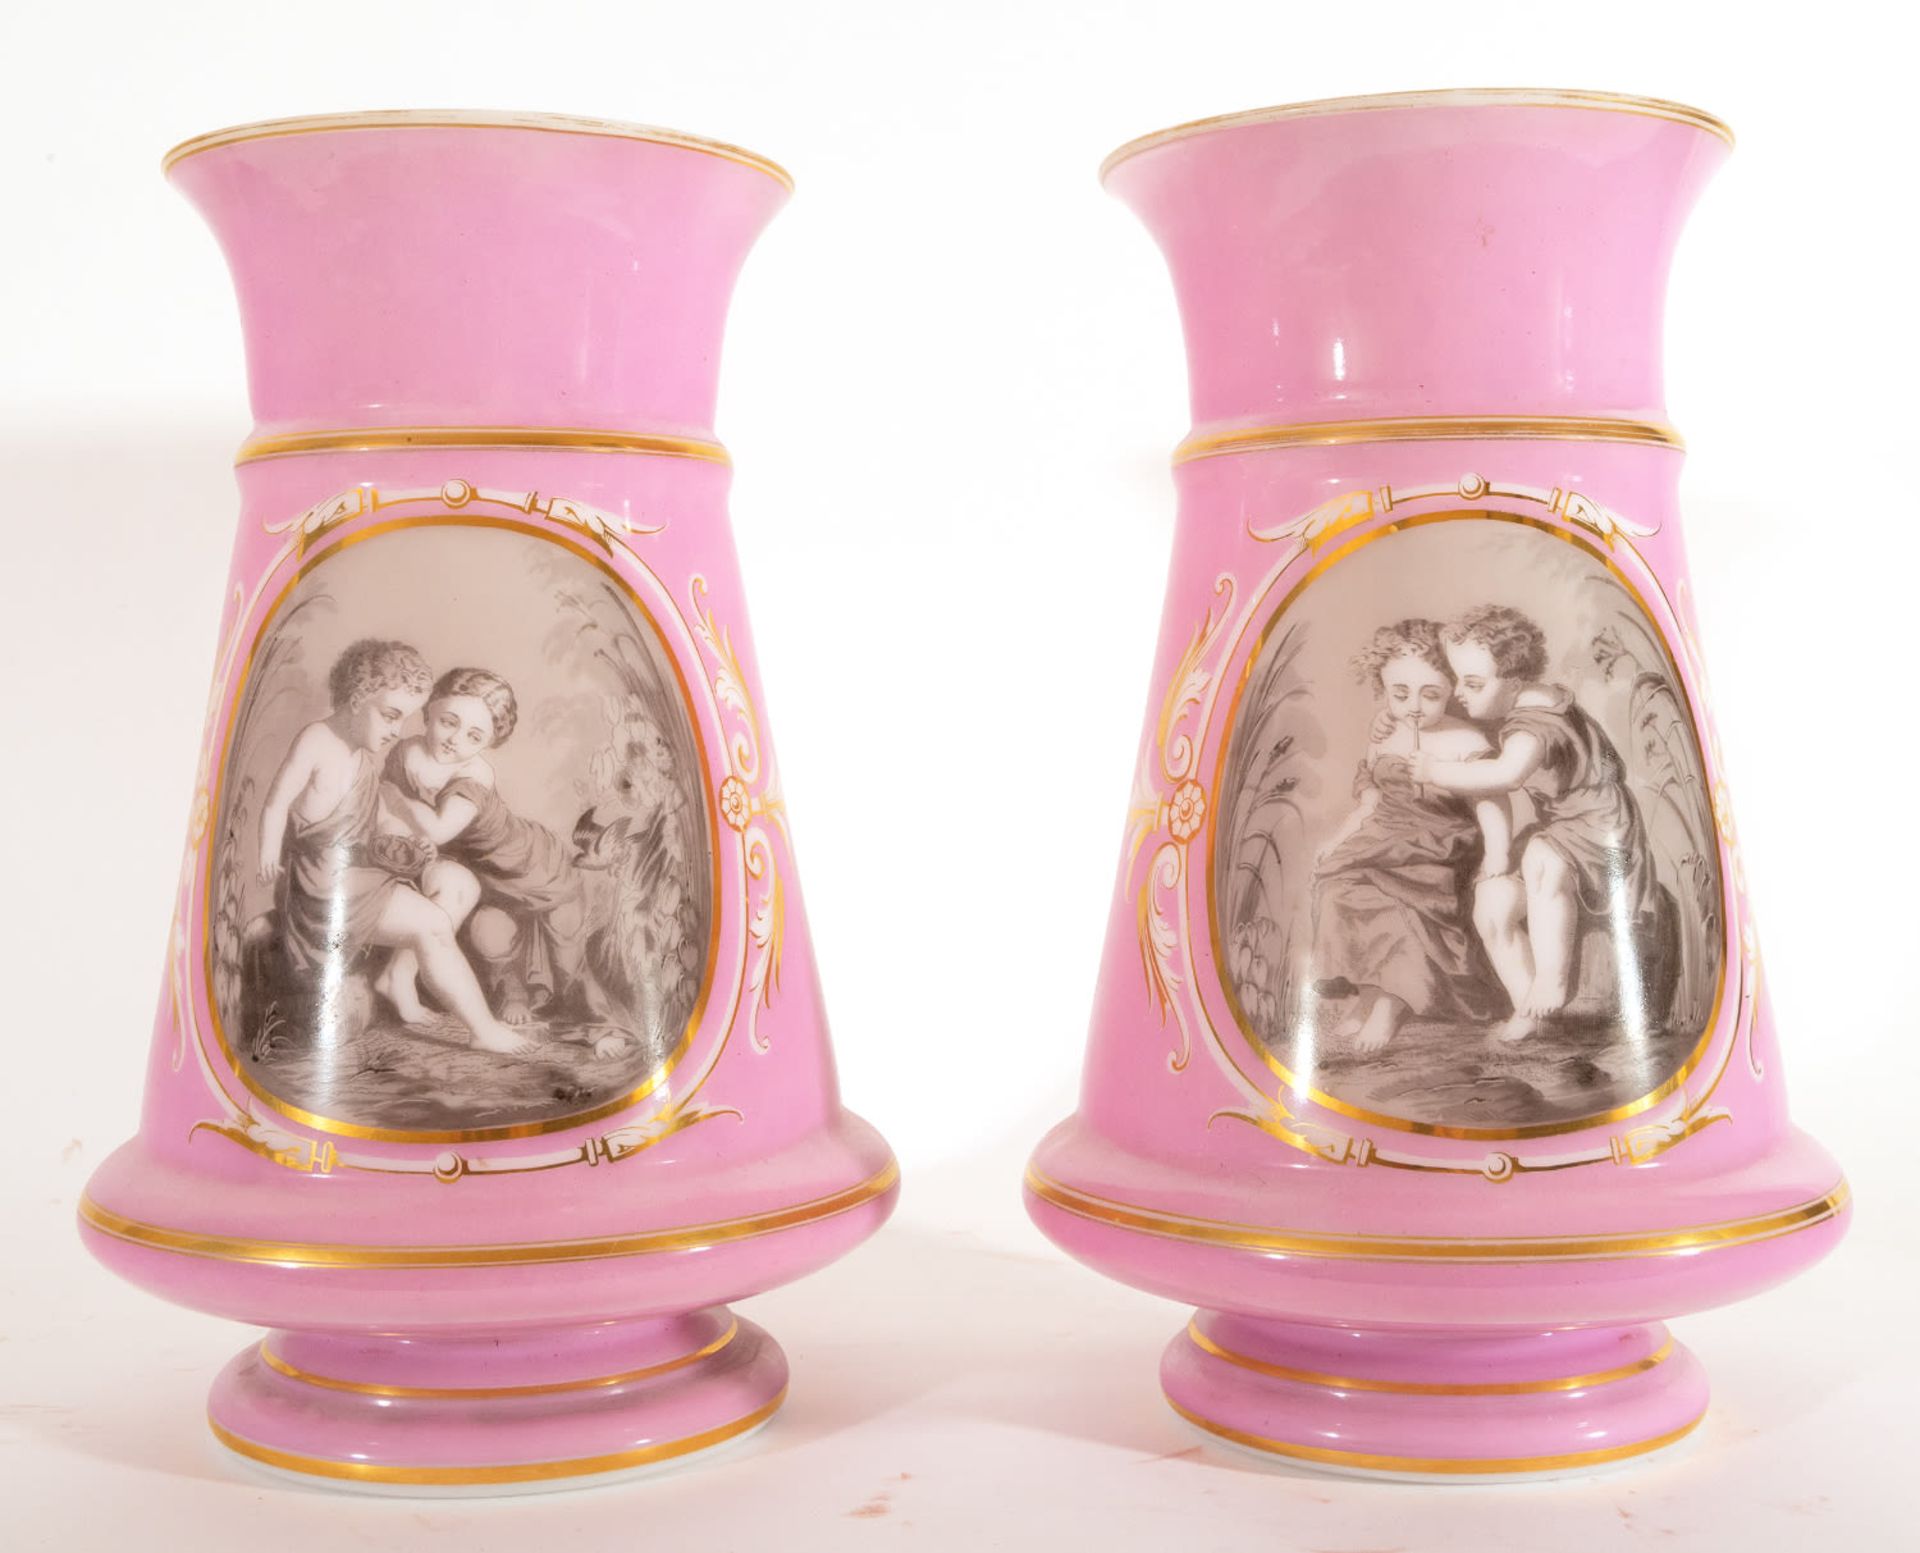 Pair of Opaline Vases with Romantic Scenes, 19th century - Image 2 of 10